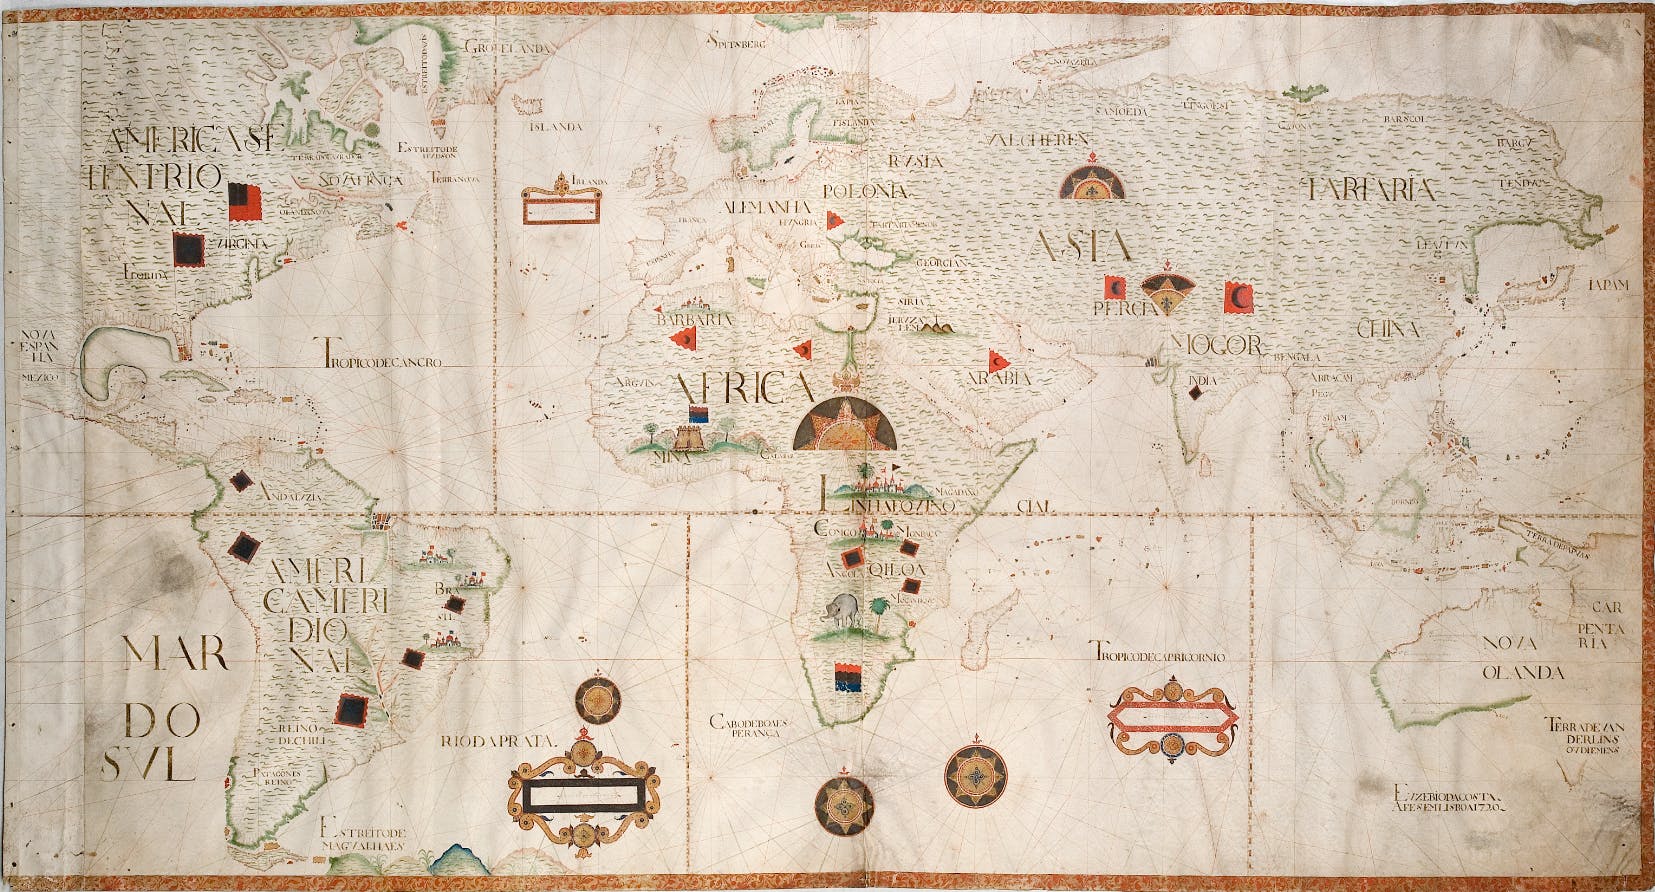 Mapa Mundi (1720), por Eusébio da Costa, cartógrafo - Museu da Marinha, Lisboa